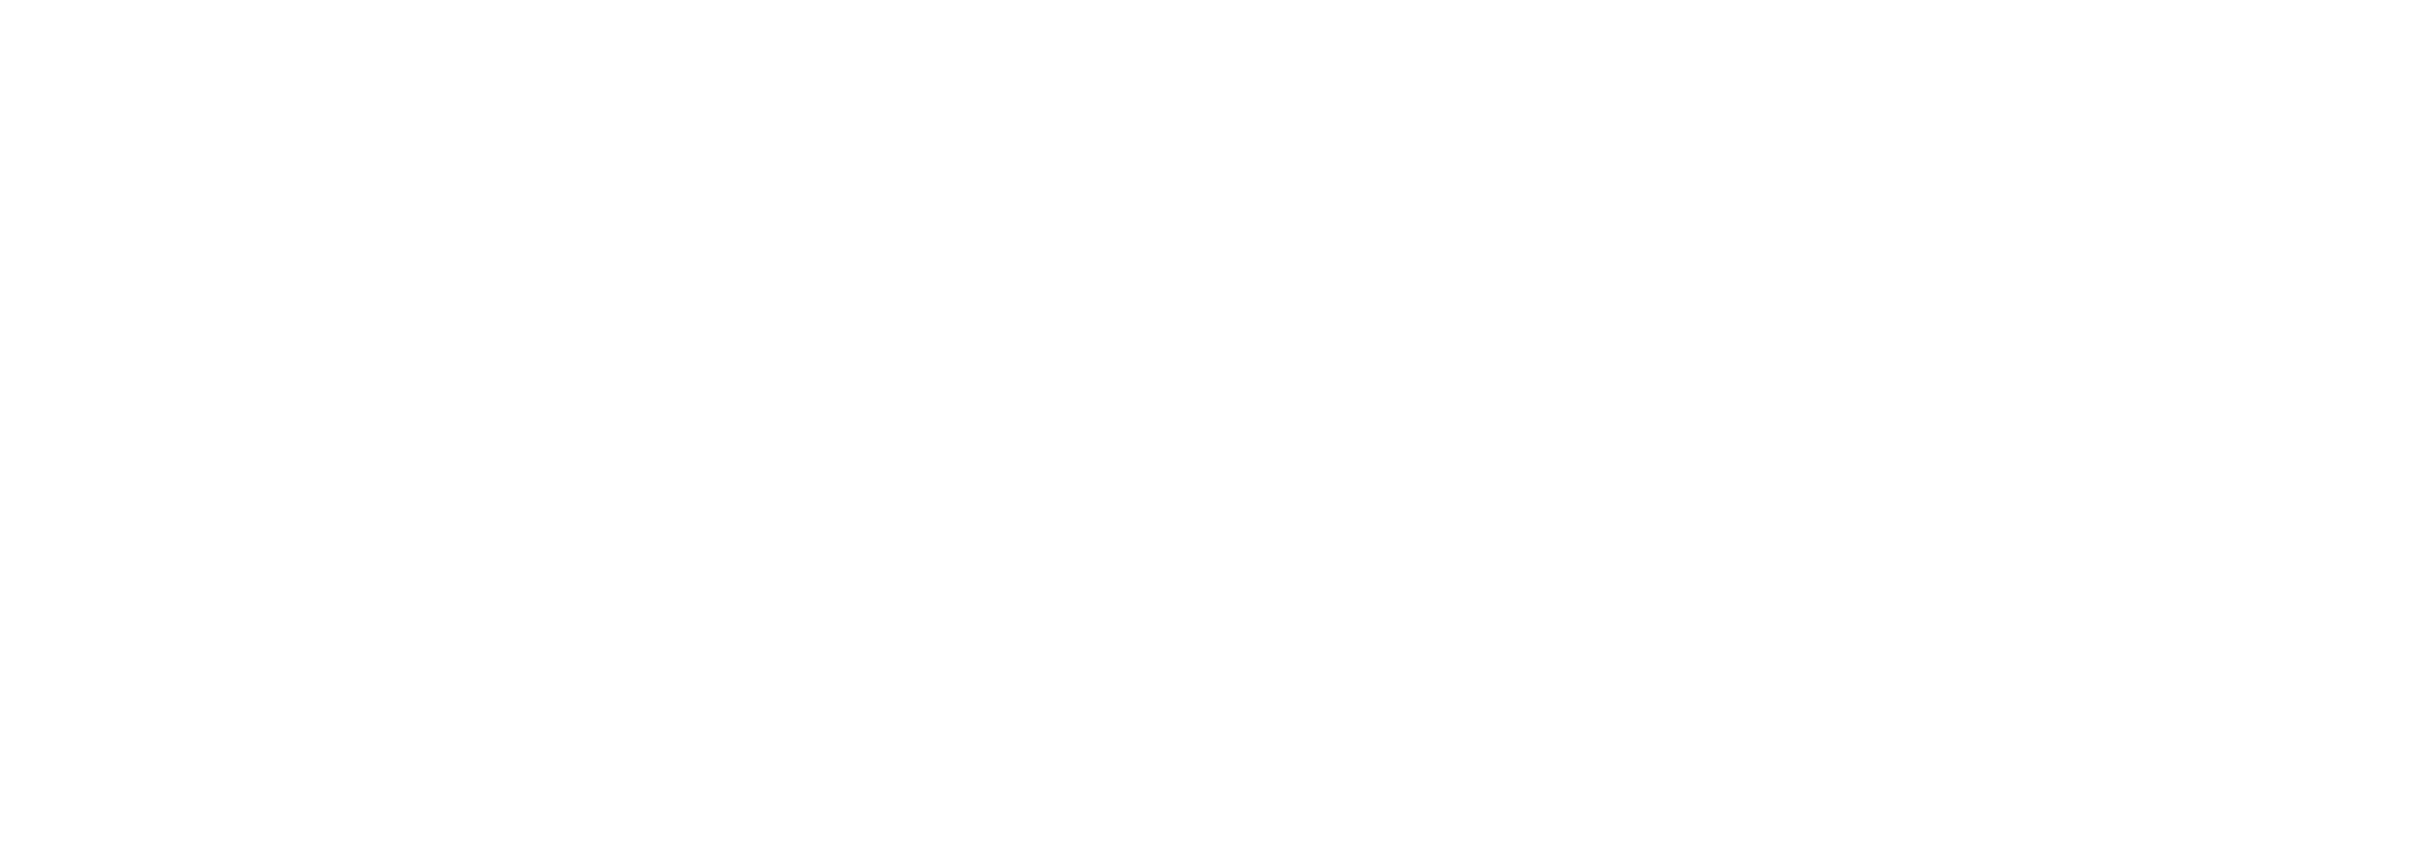 kpn security logo ZW Groen RGB